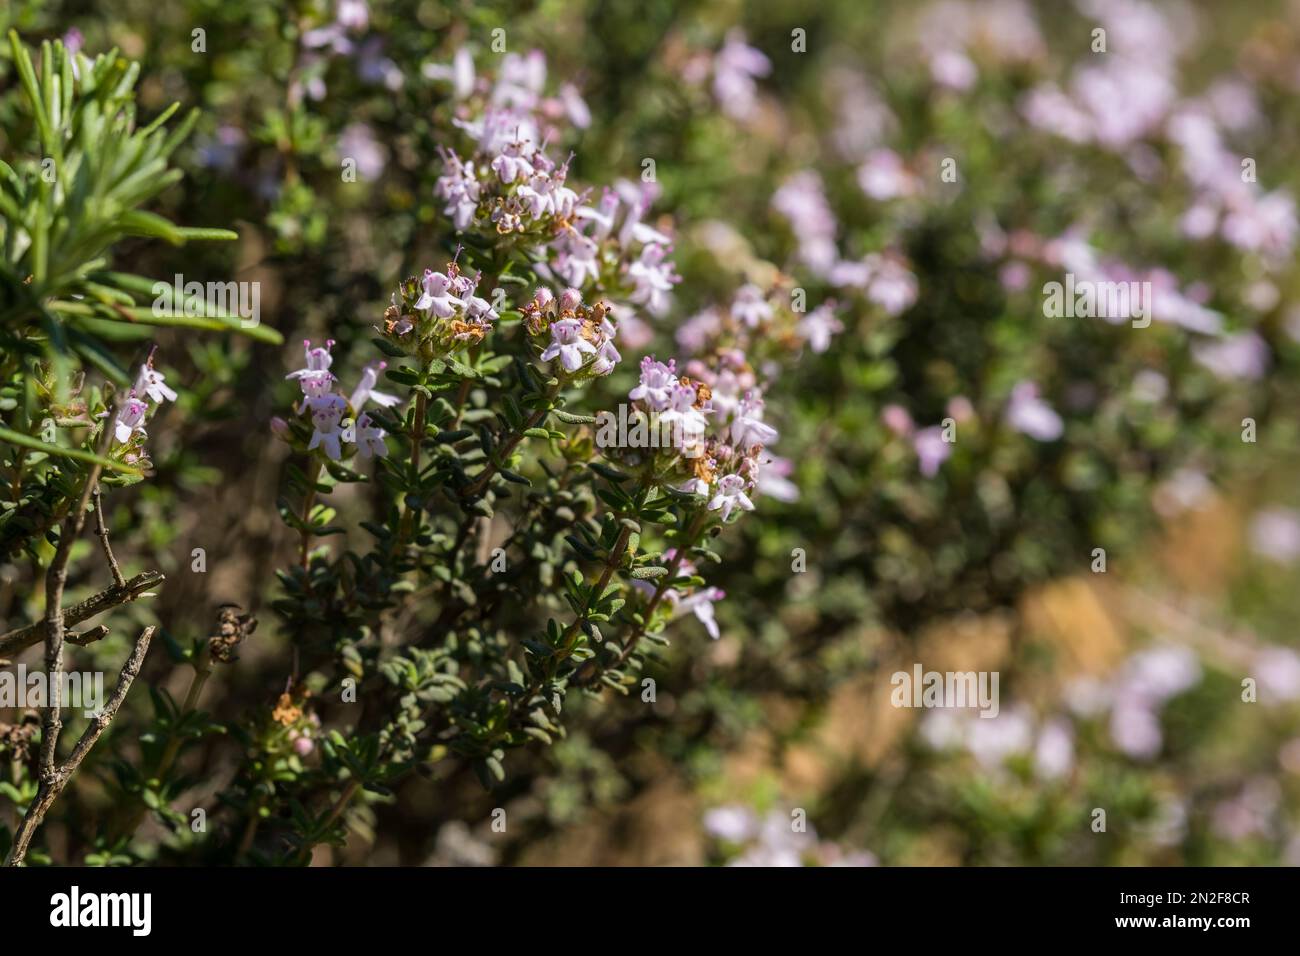 Thyme wild bush among the stones. Thymus vulgaris, thymes - medicinal herbs. Natural park Garraf, Spain Stock Photo